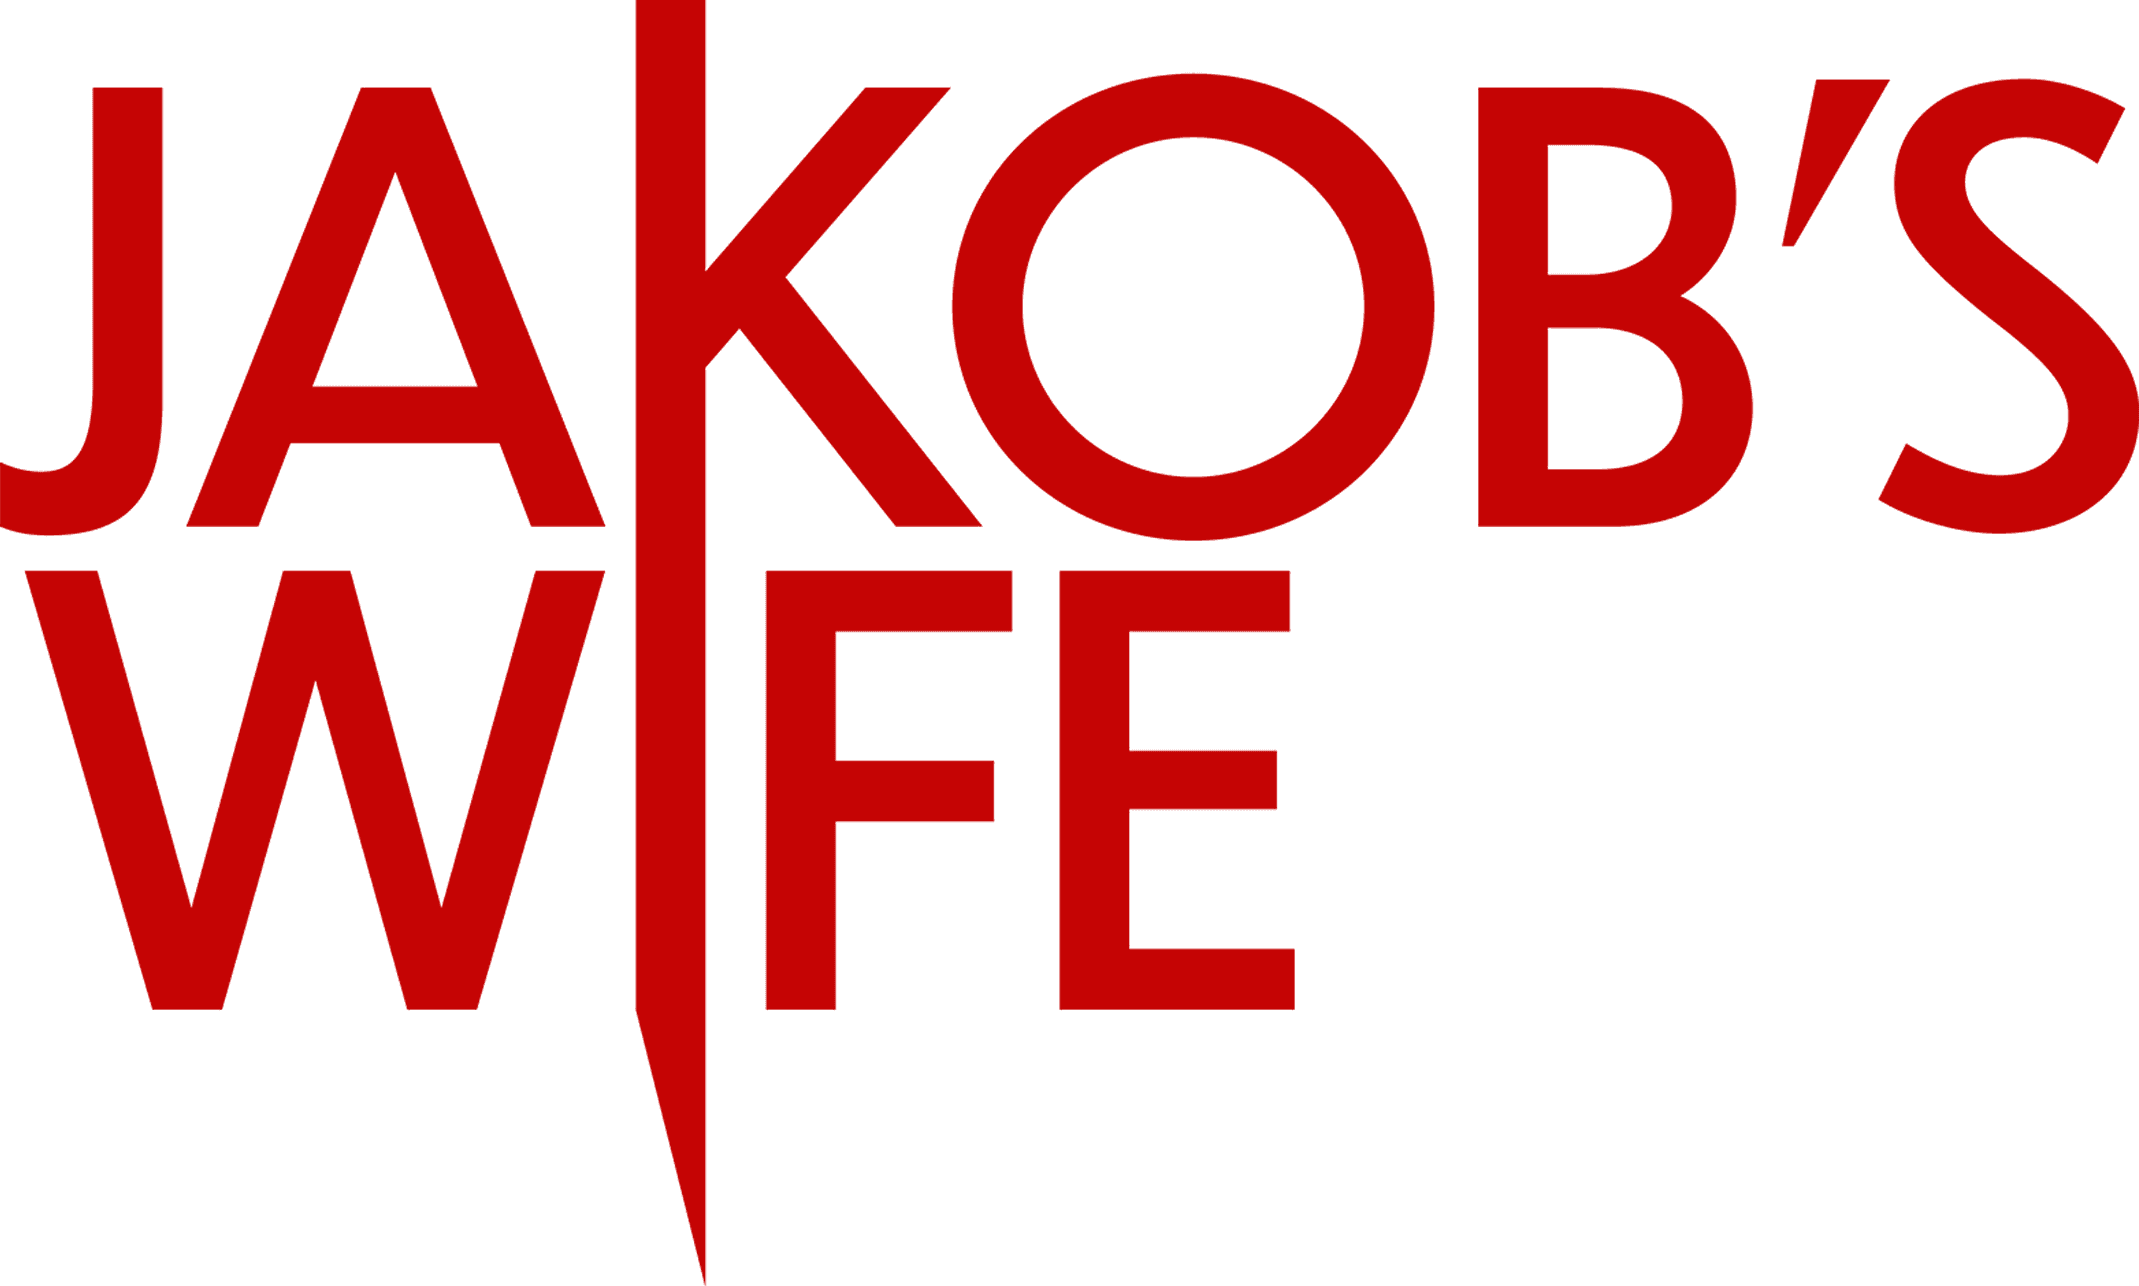 Jakob's Wife logo